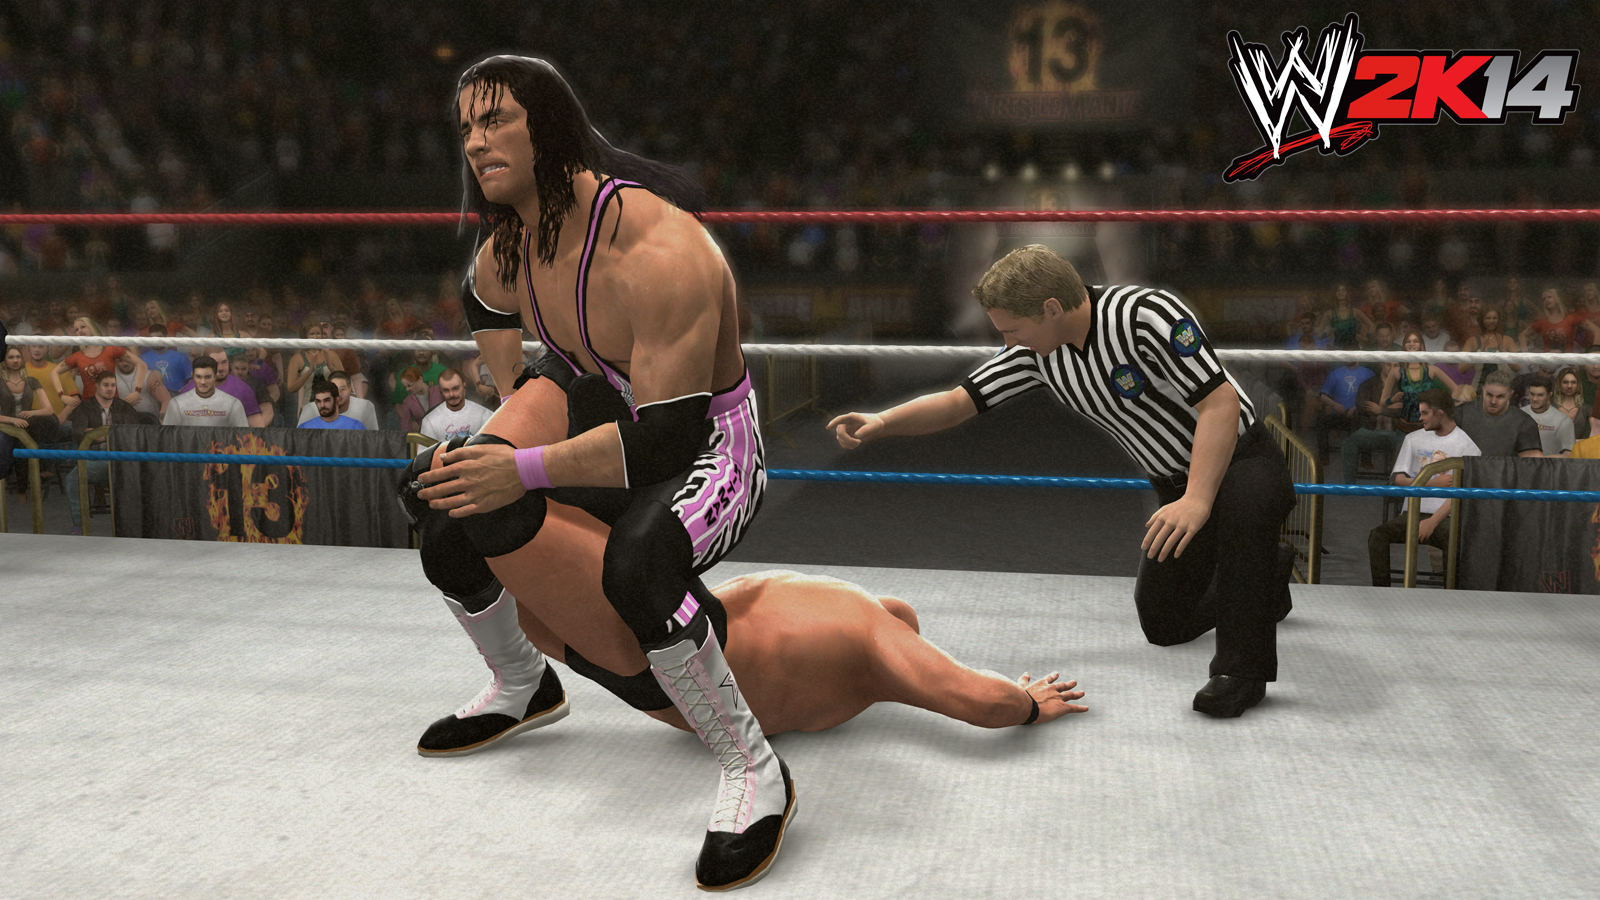 Скриншоты WWE 2K14 - картинки, арты, обои PLAYER ONE